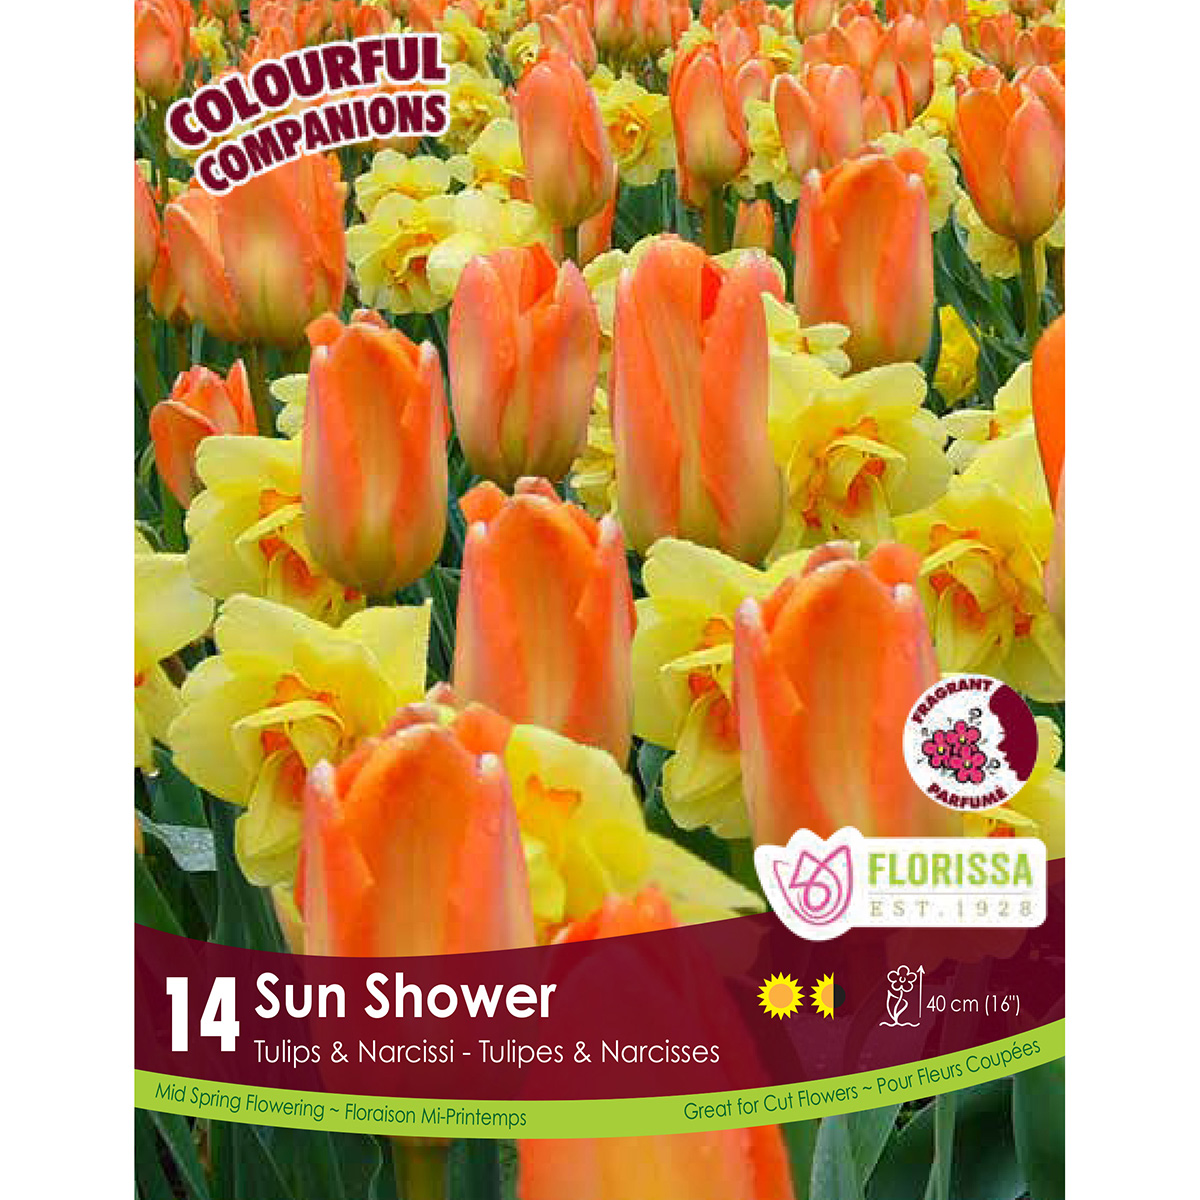 Colourful Companions 'Sun Shower' Bulbs-Narcissi and Tulipa Mix